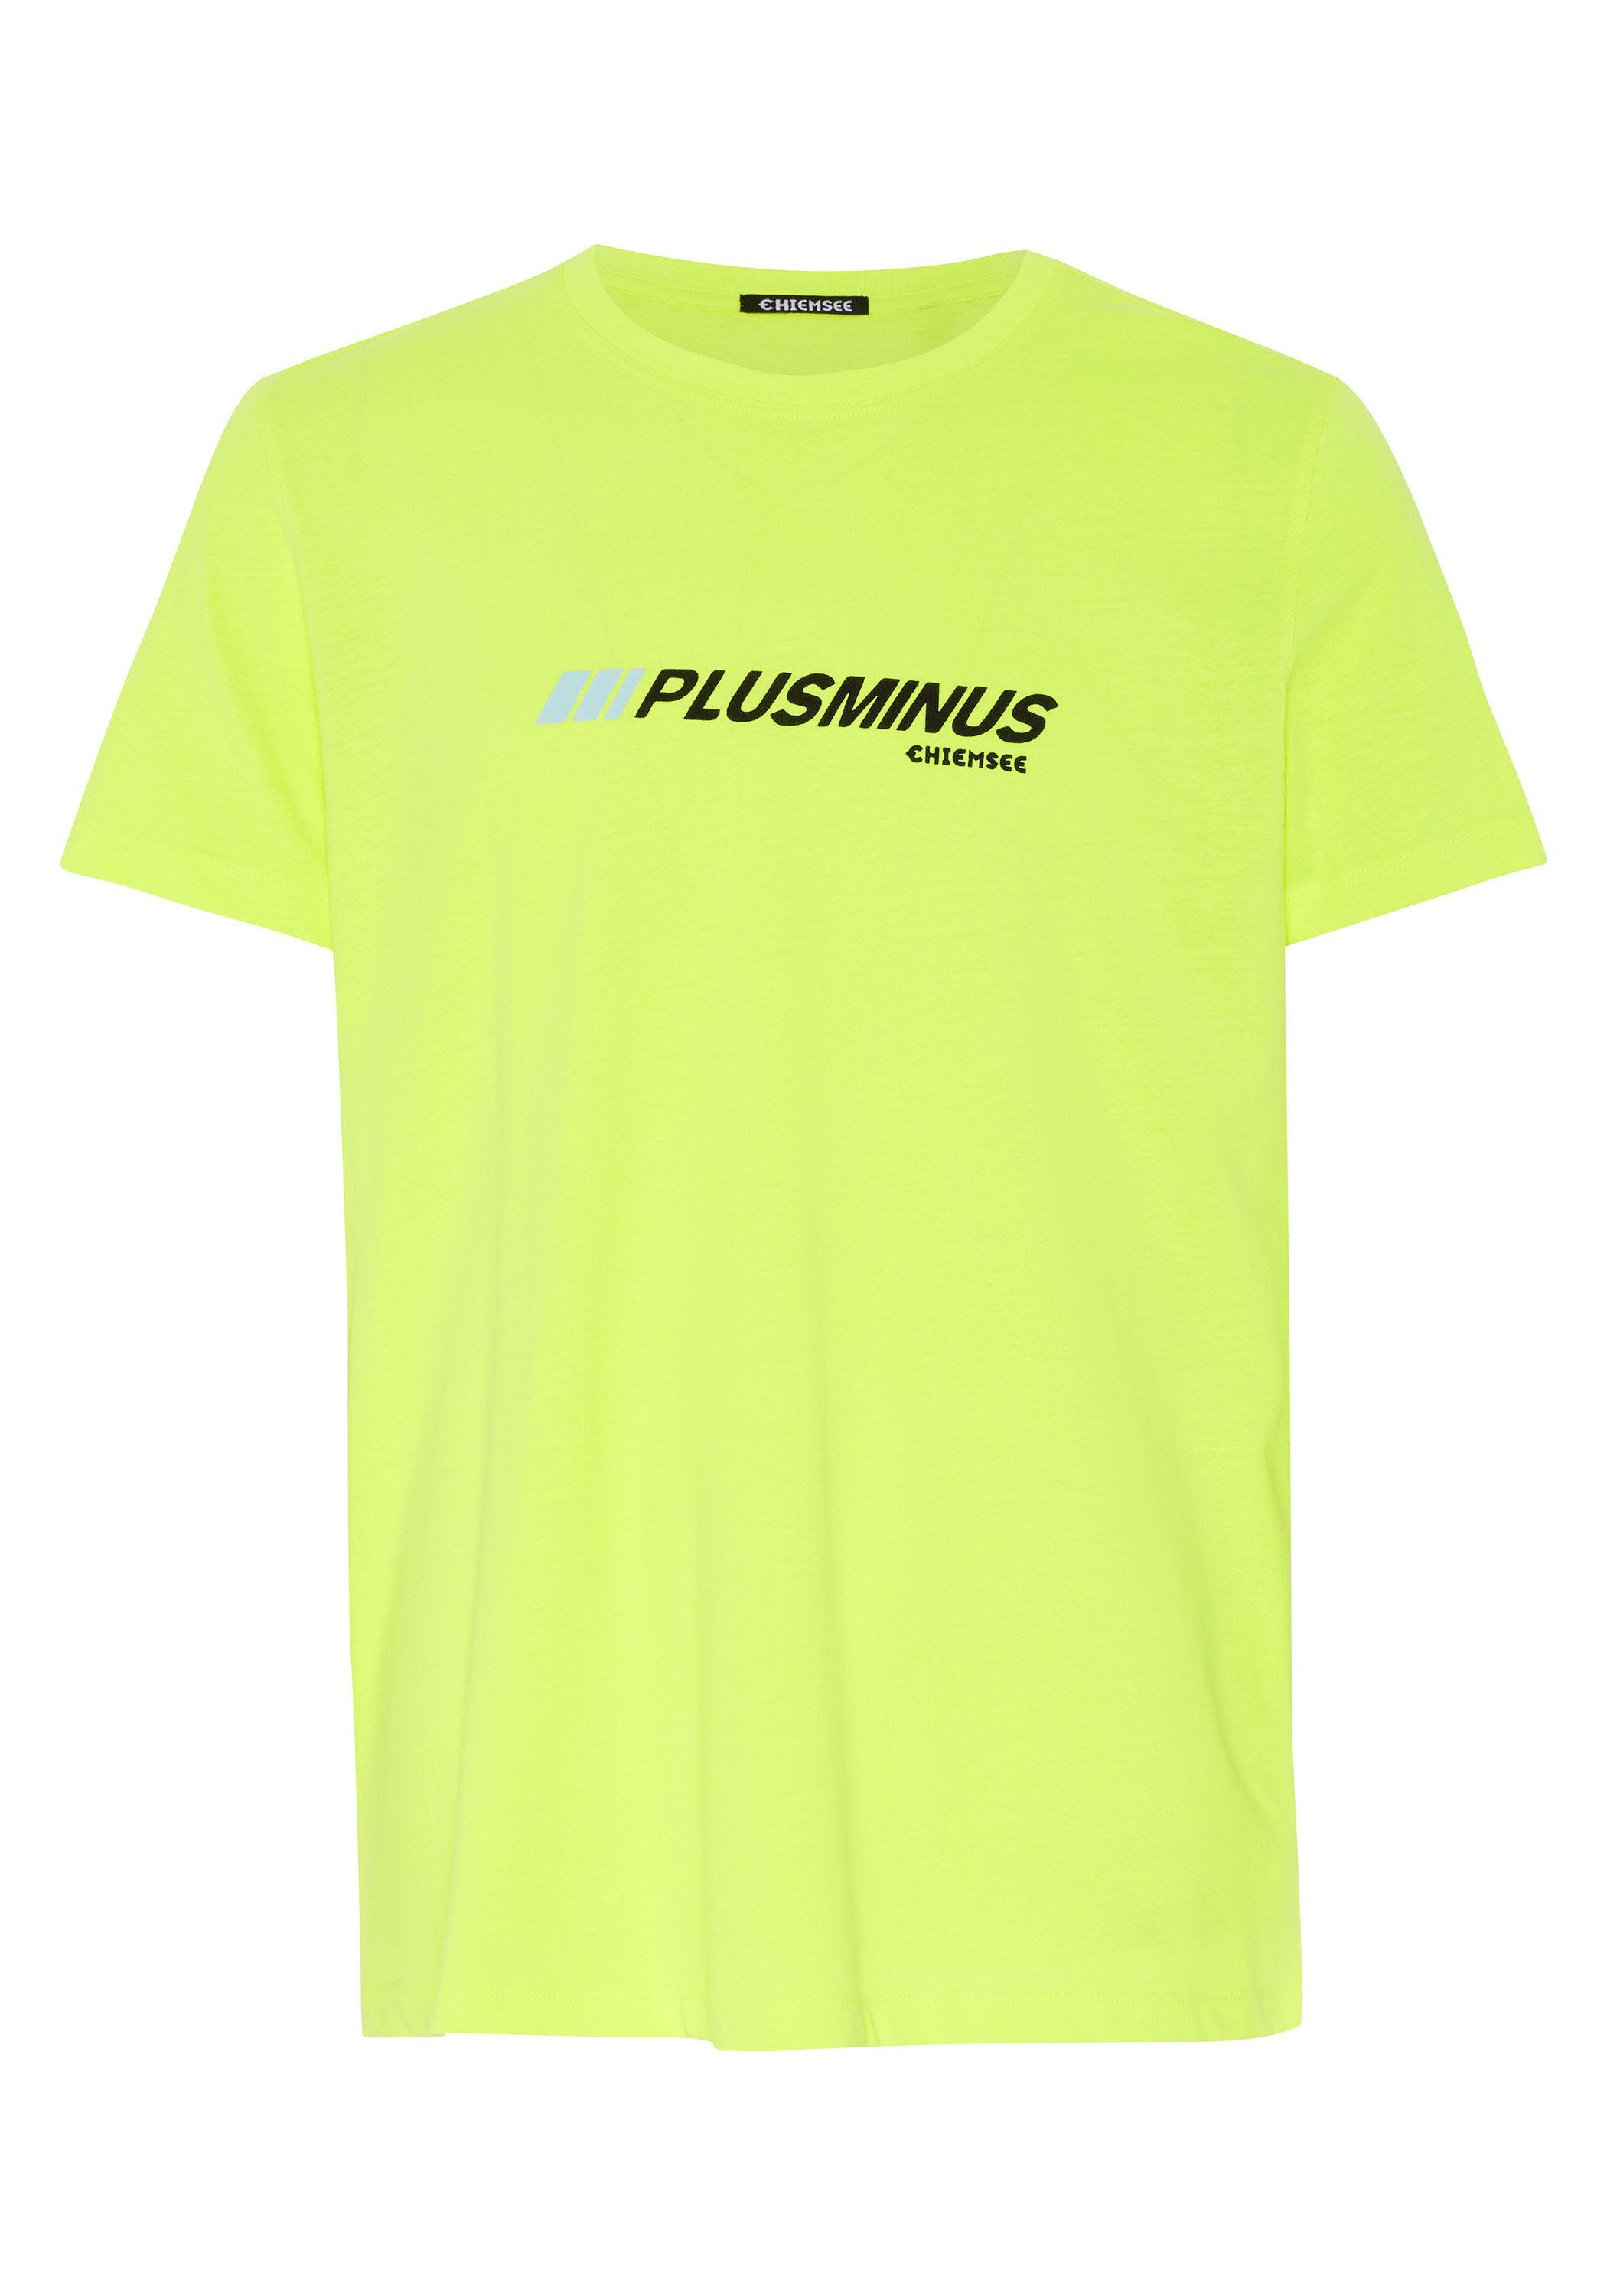 Chiemsee Print-Shirt T-Shirt mit PLUS-MINUS-Print 1 Safety Yellow